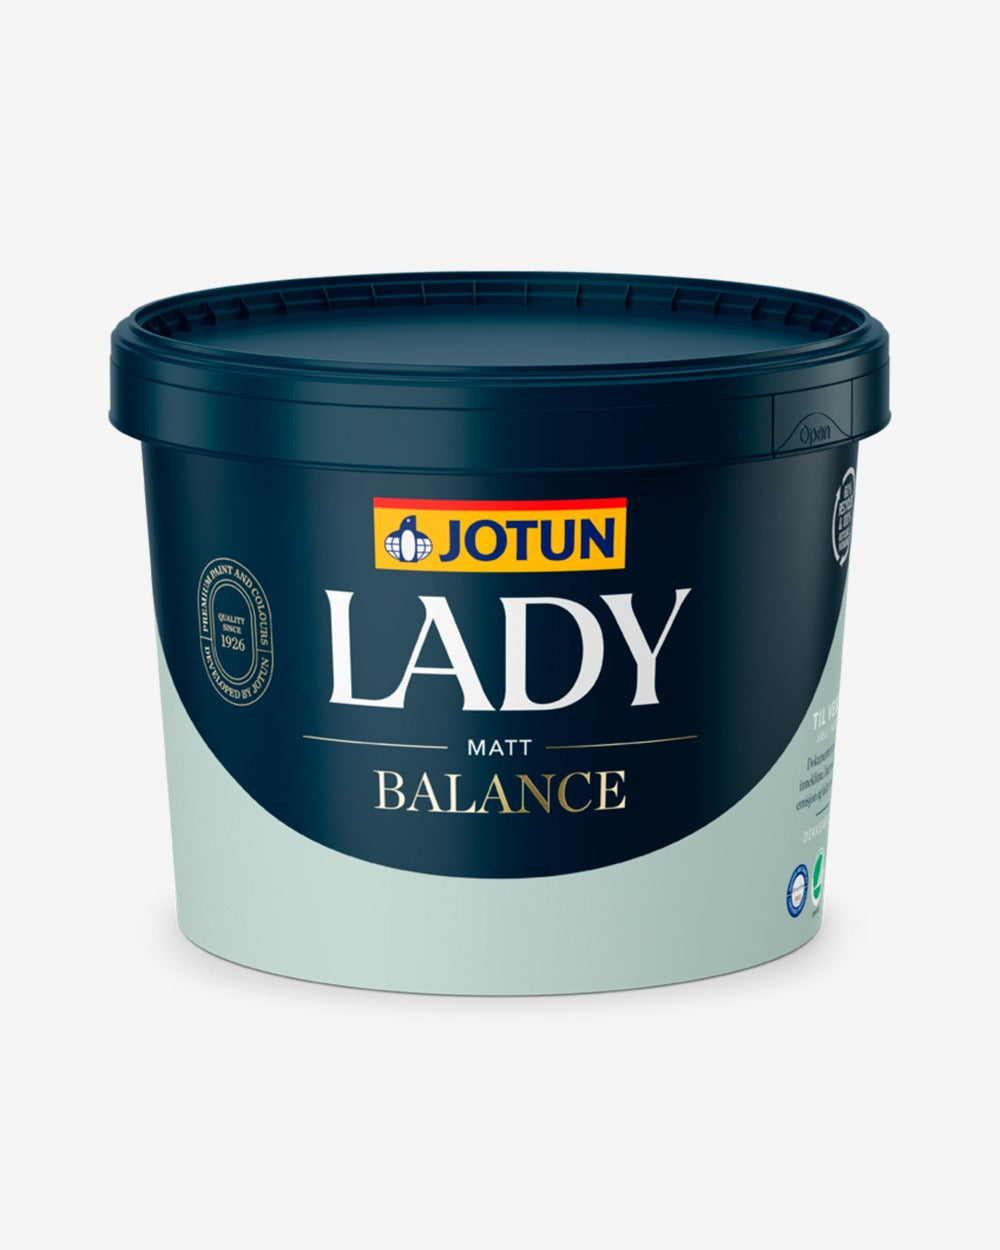 Jotun Lady Balance Vægmaling | Allergivenlig vægmaling